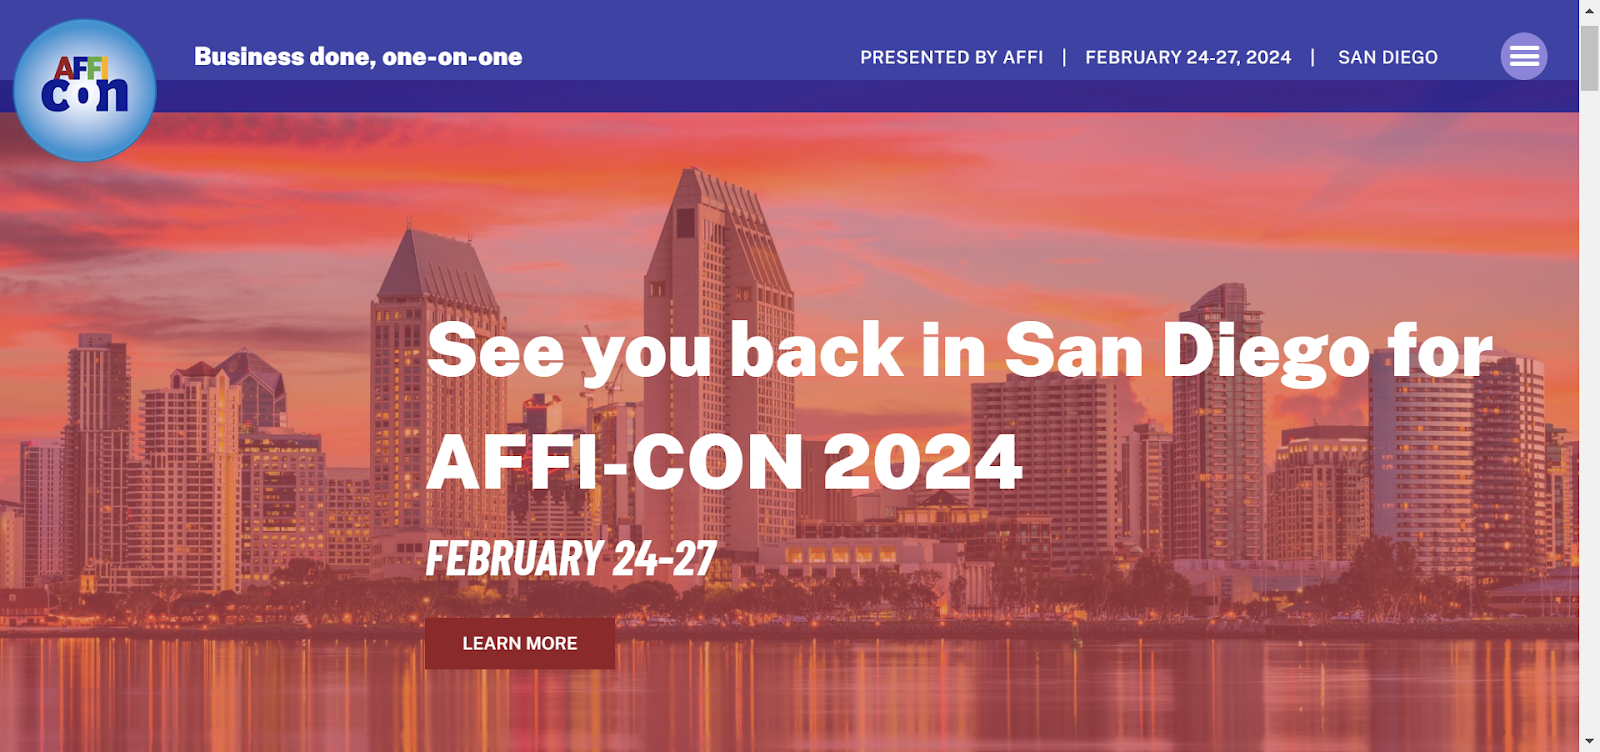 AFFI-CON 2024 website promotional banner